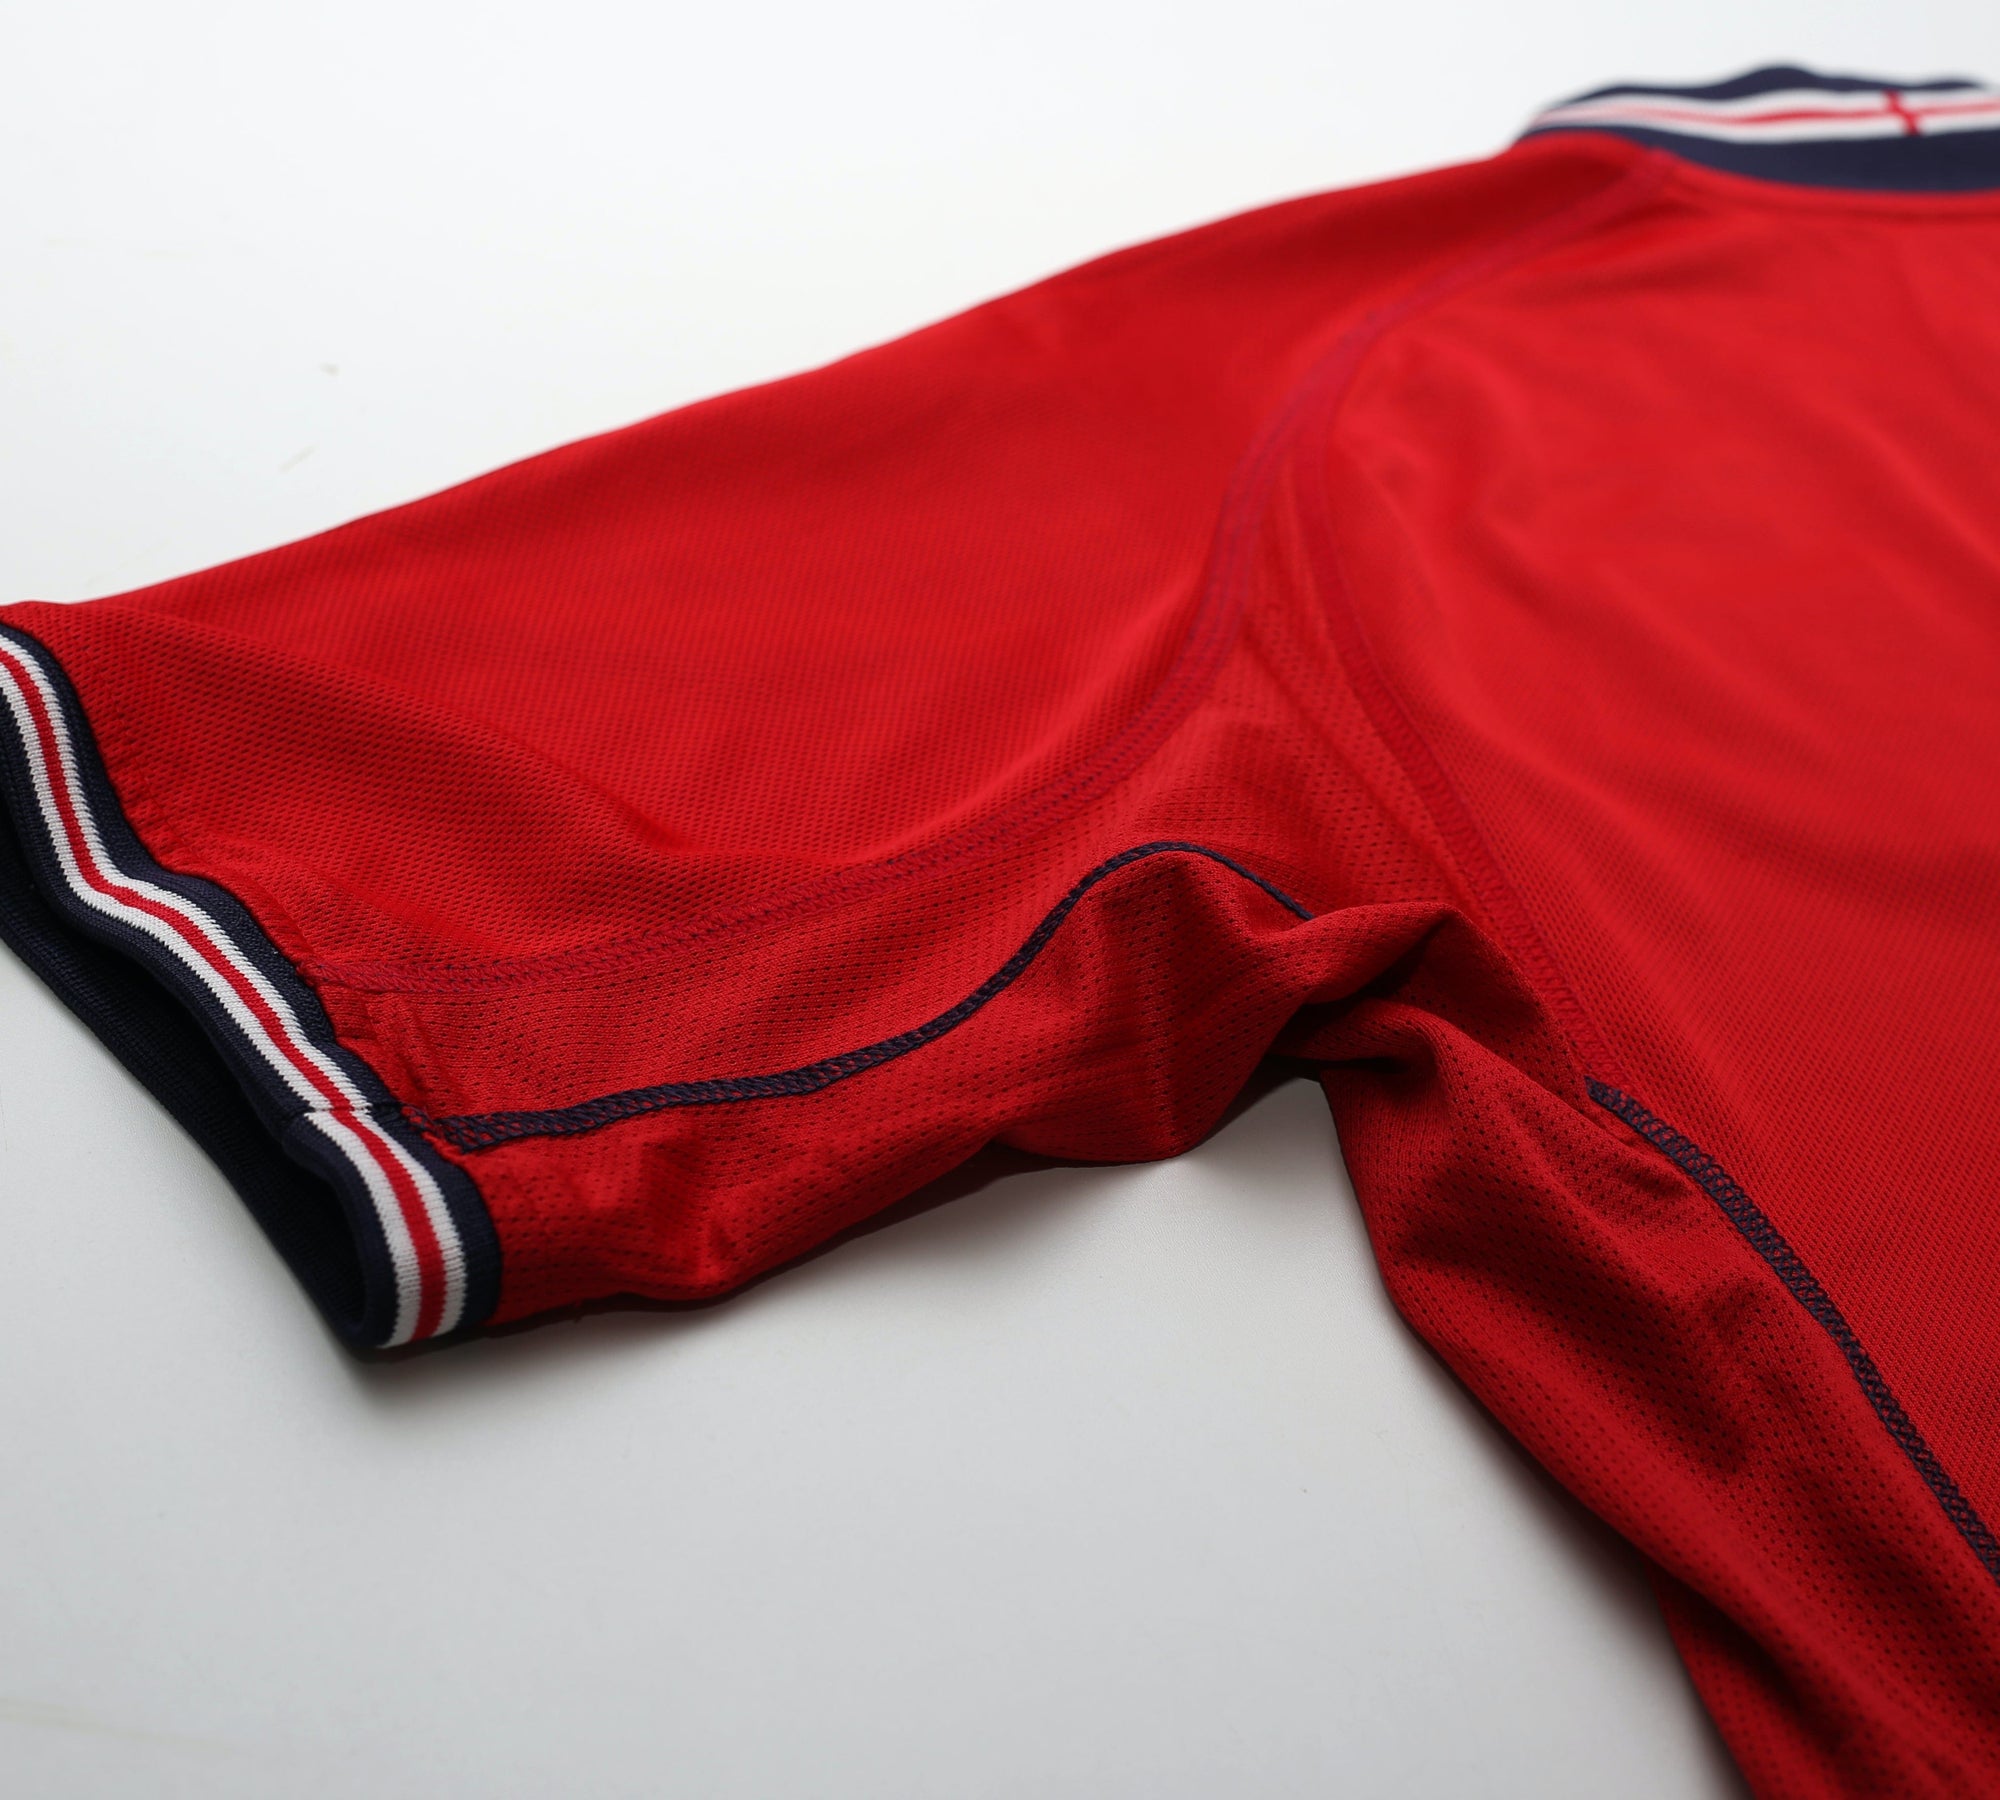 2002/04 SCHOLES #8 England Vintage Umbro Away Football Shirt (M) WC 2002